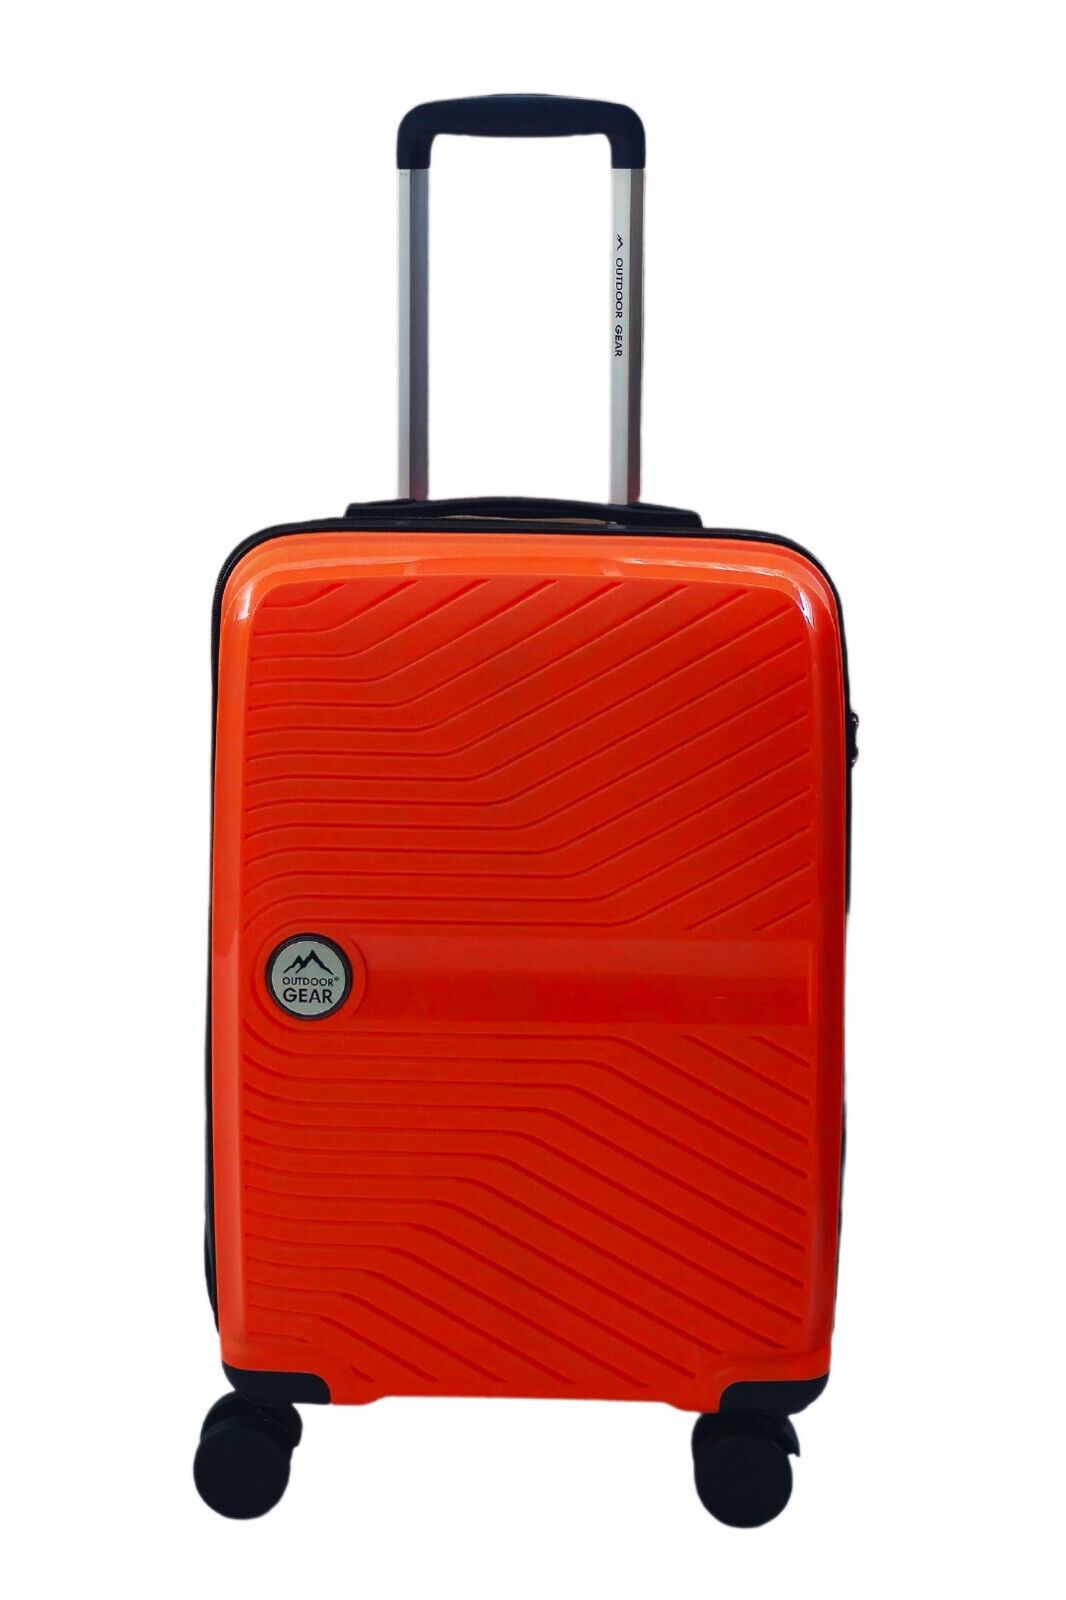 Abbeville Cabin Hard Shell Suitcase in Orange